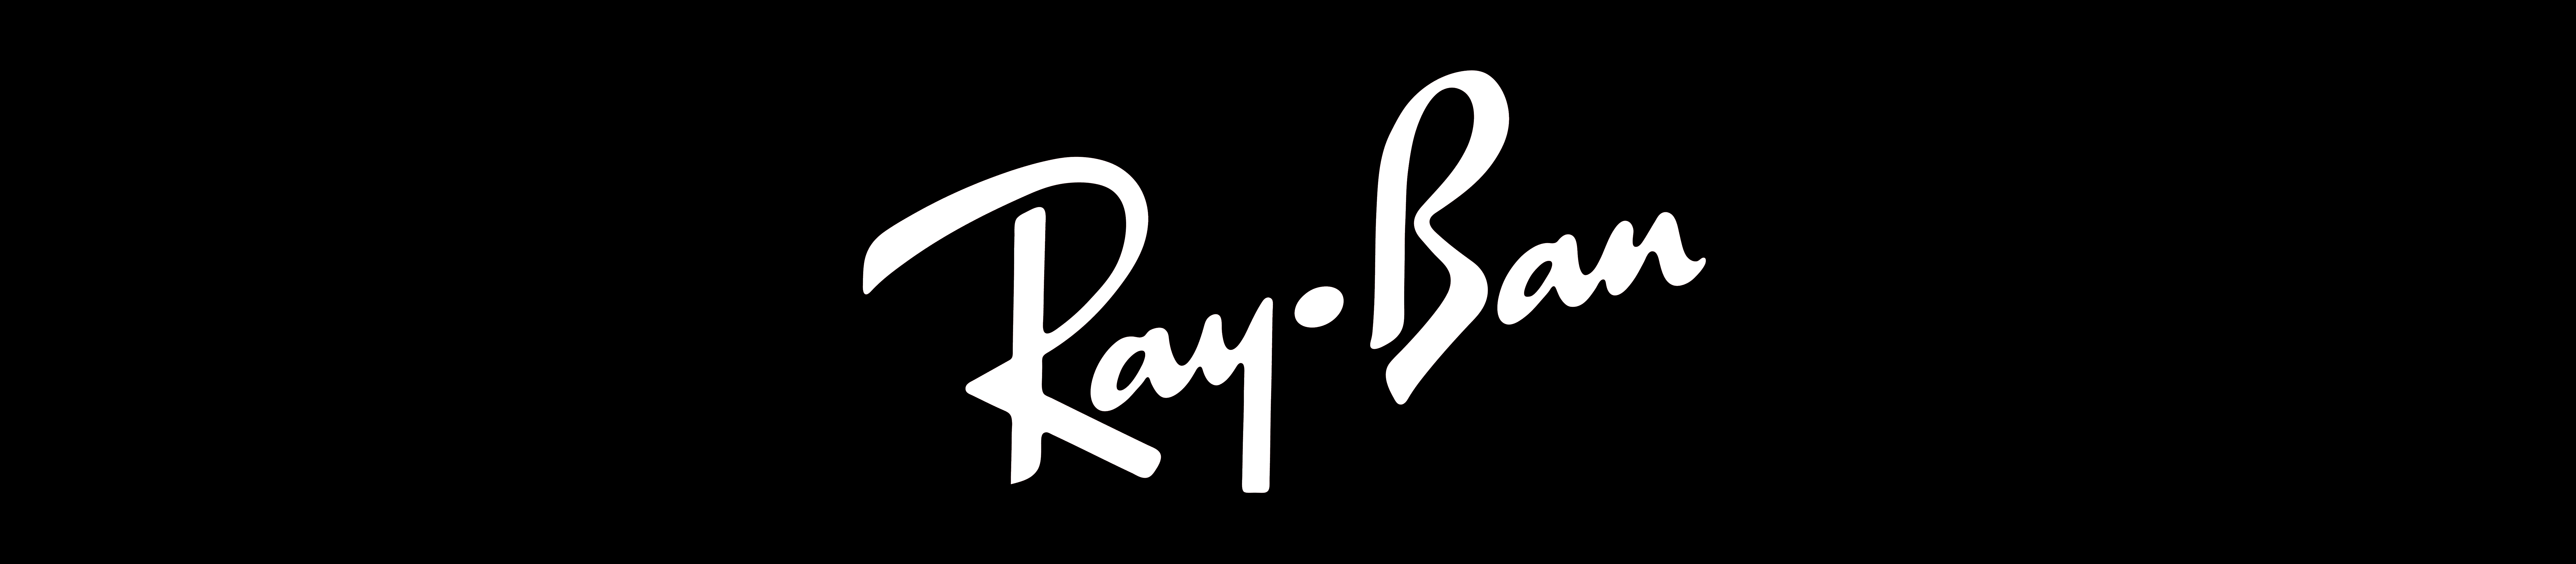 Ray-Ban Frames - Sunglasses and Style Blog - ShadesDaddy.com